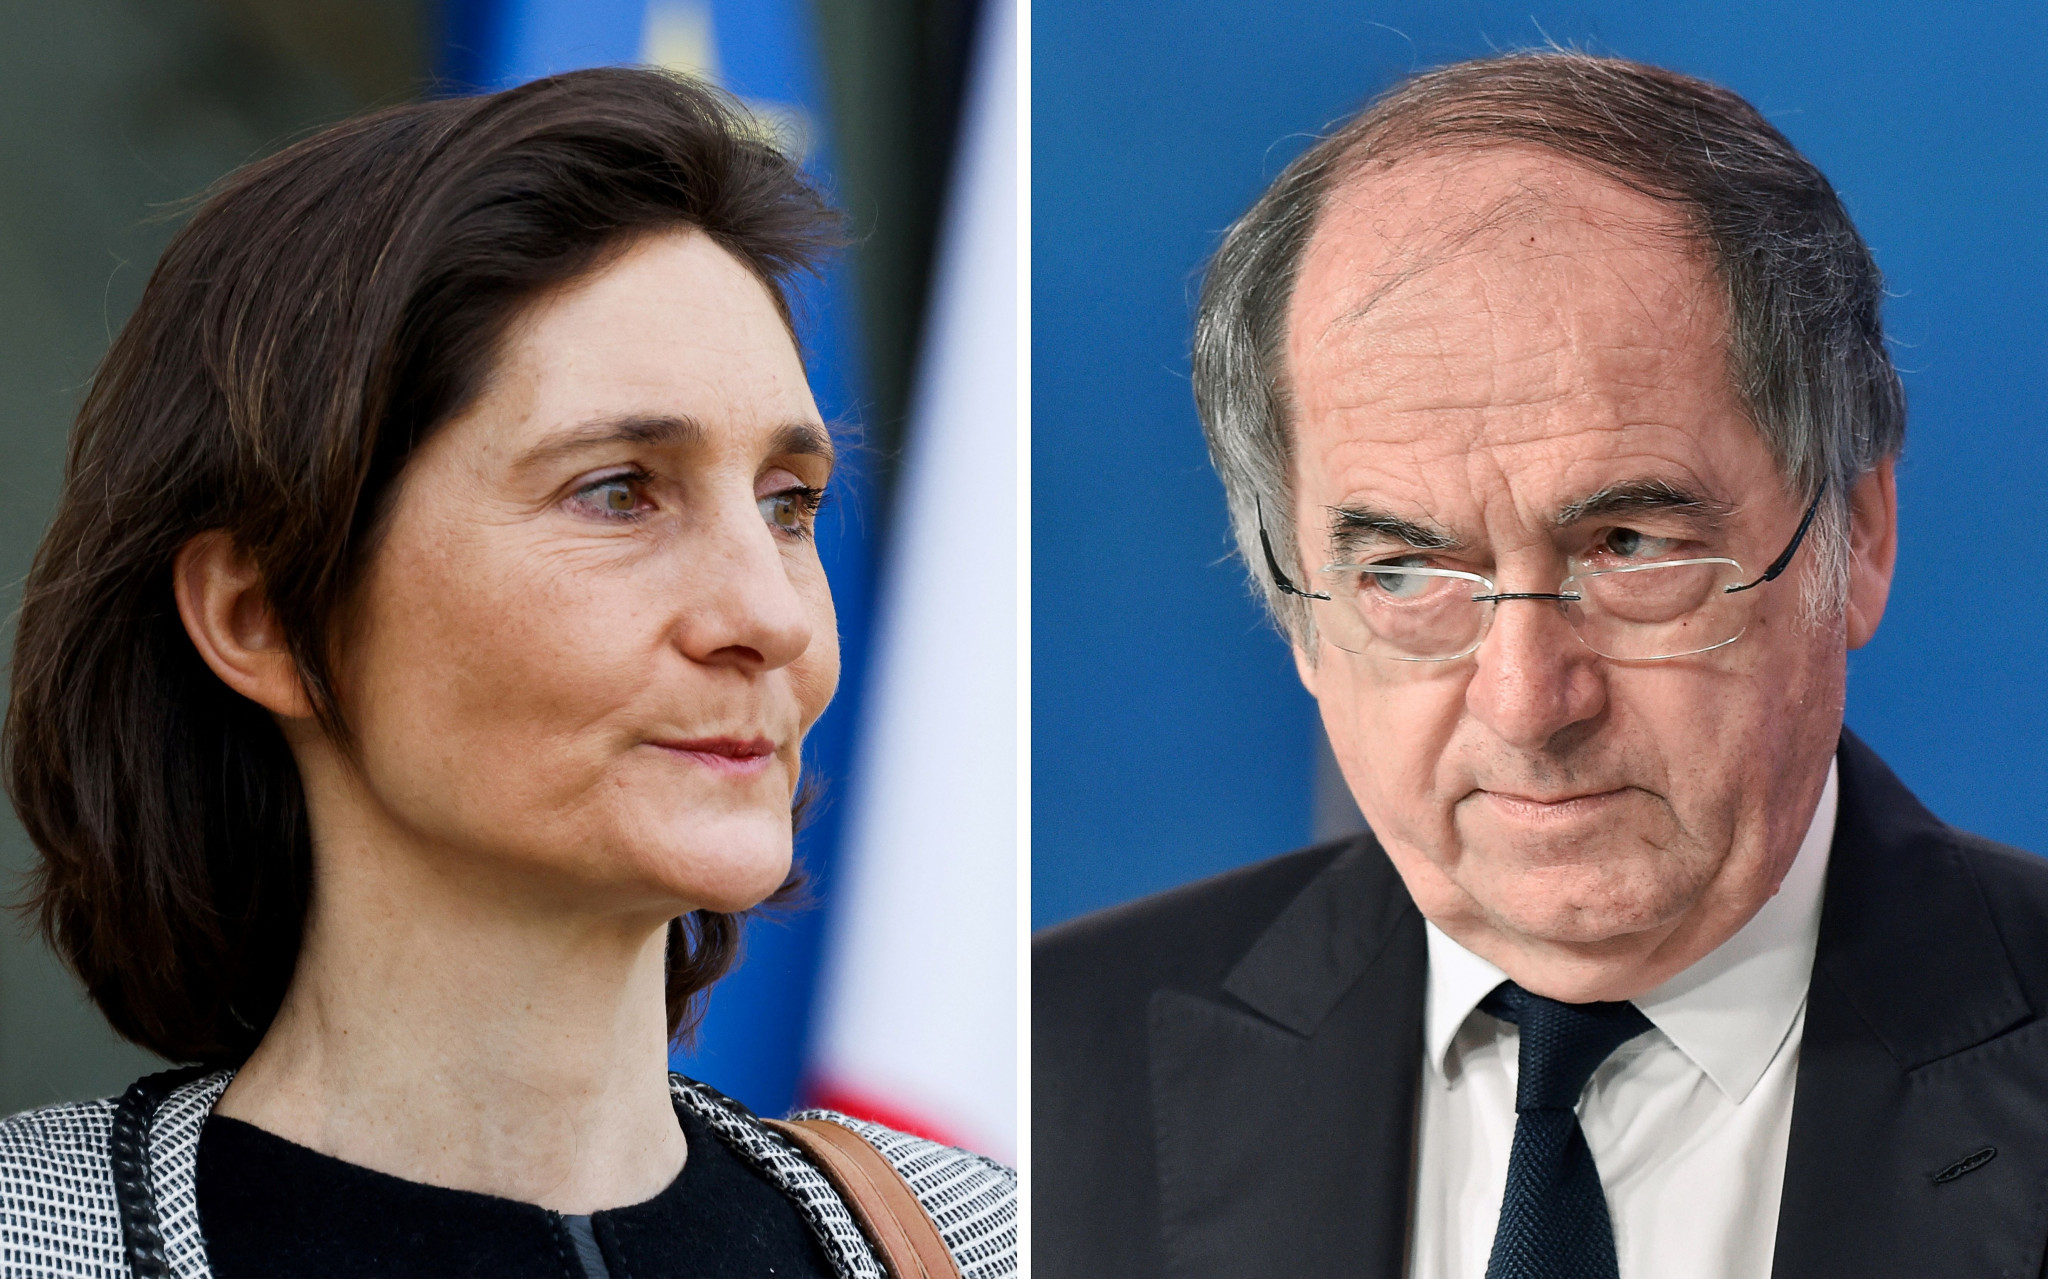 The lawyers of Noël Le Graët, right, have revealed plans to file a libel case against France’s Sports Minister Amélie Oudéa-Castéra, left ©Getty Images